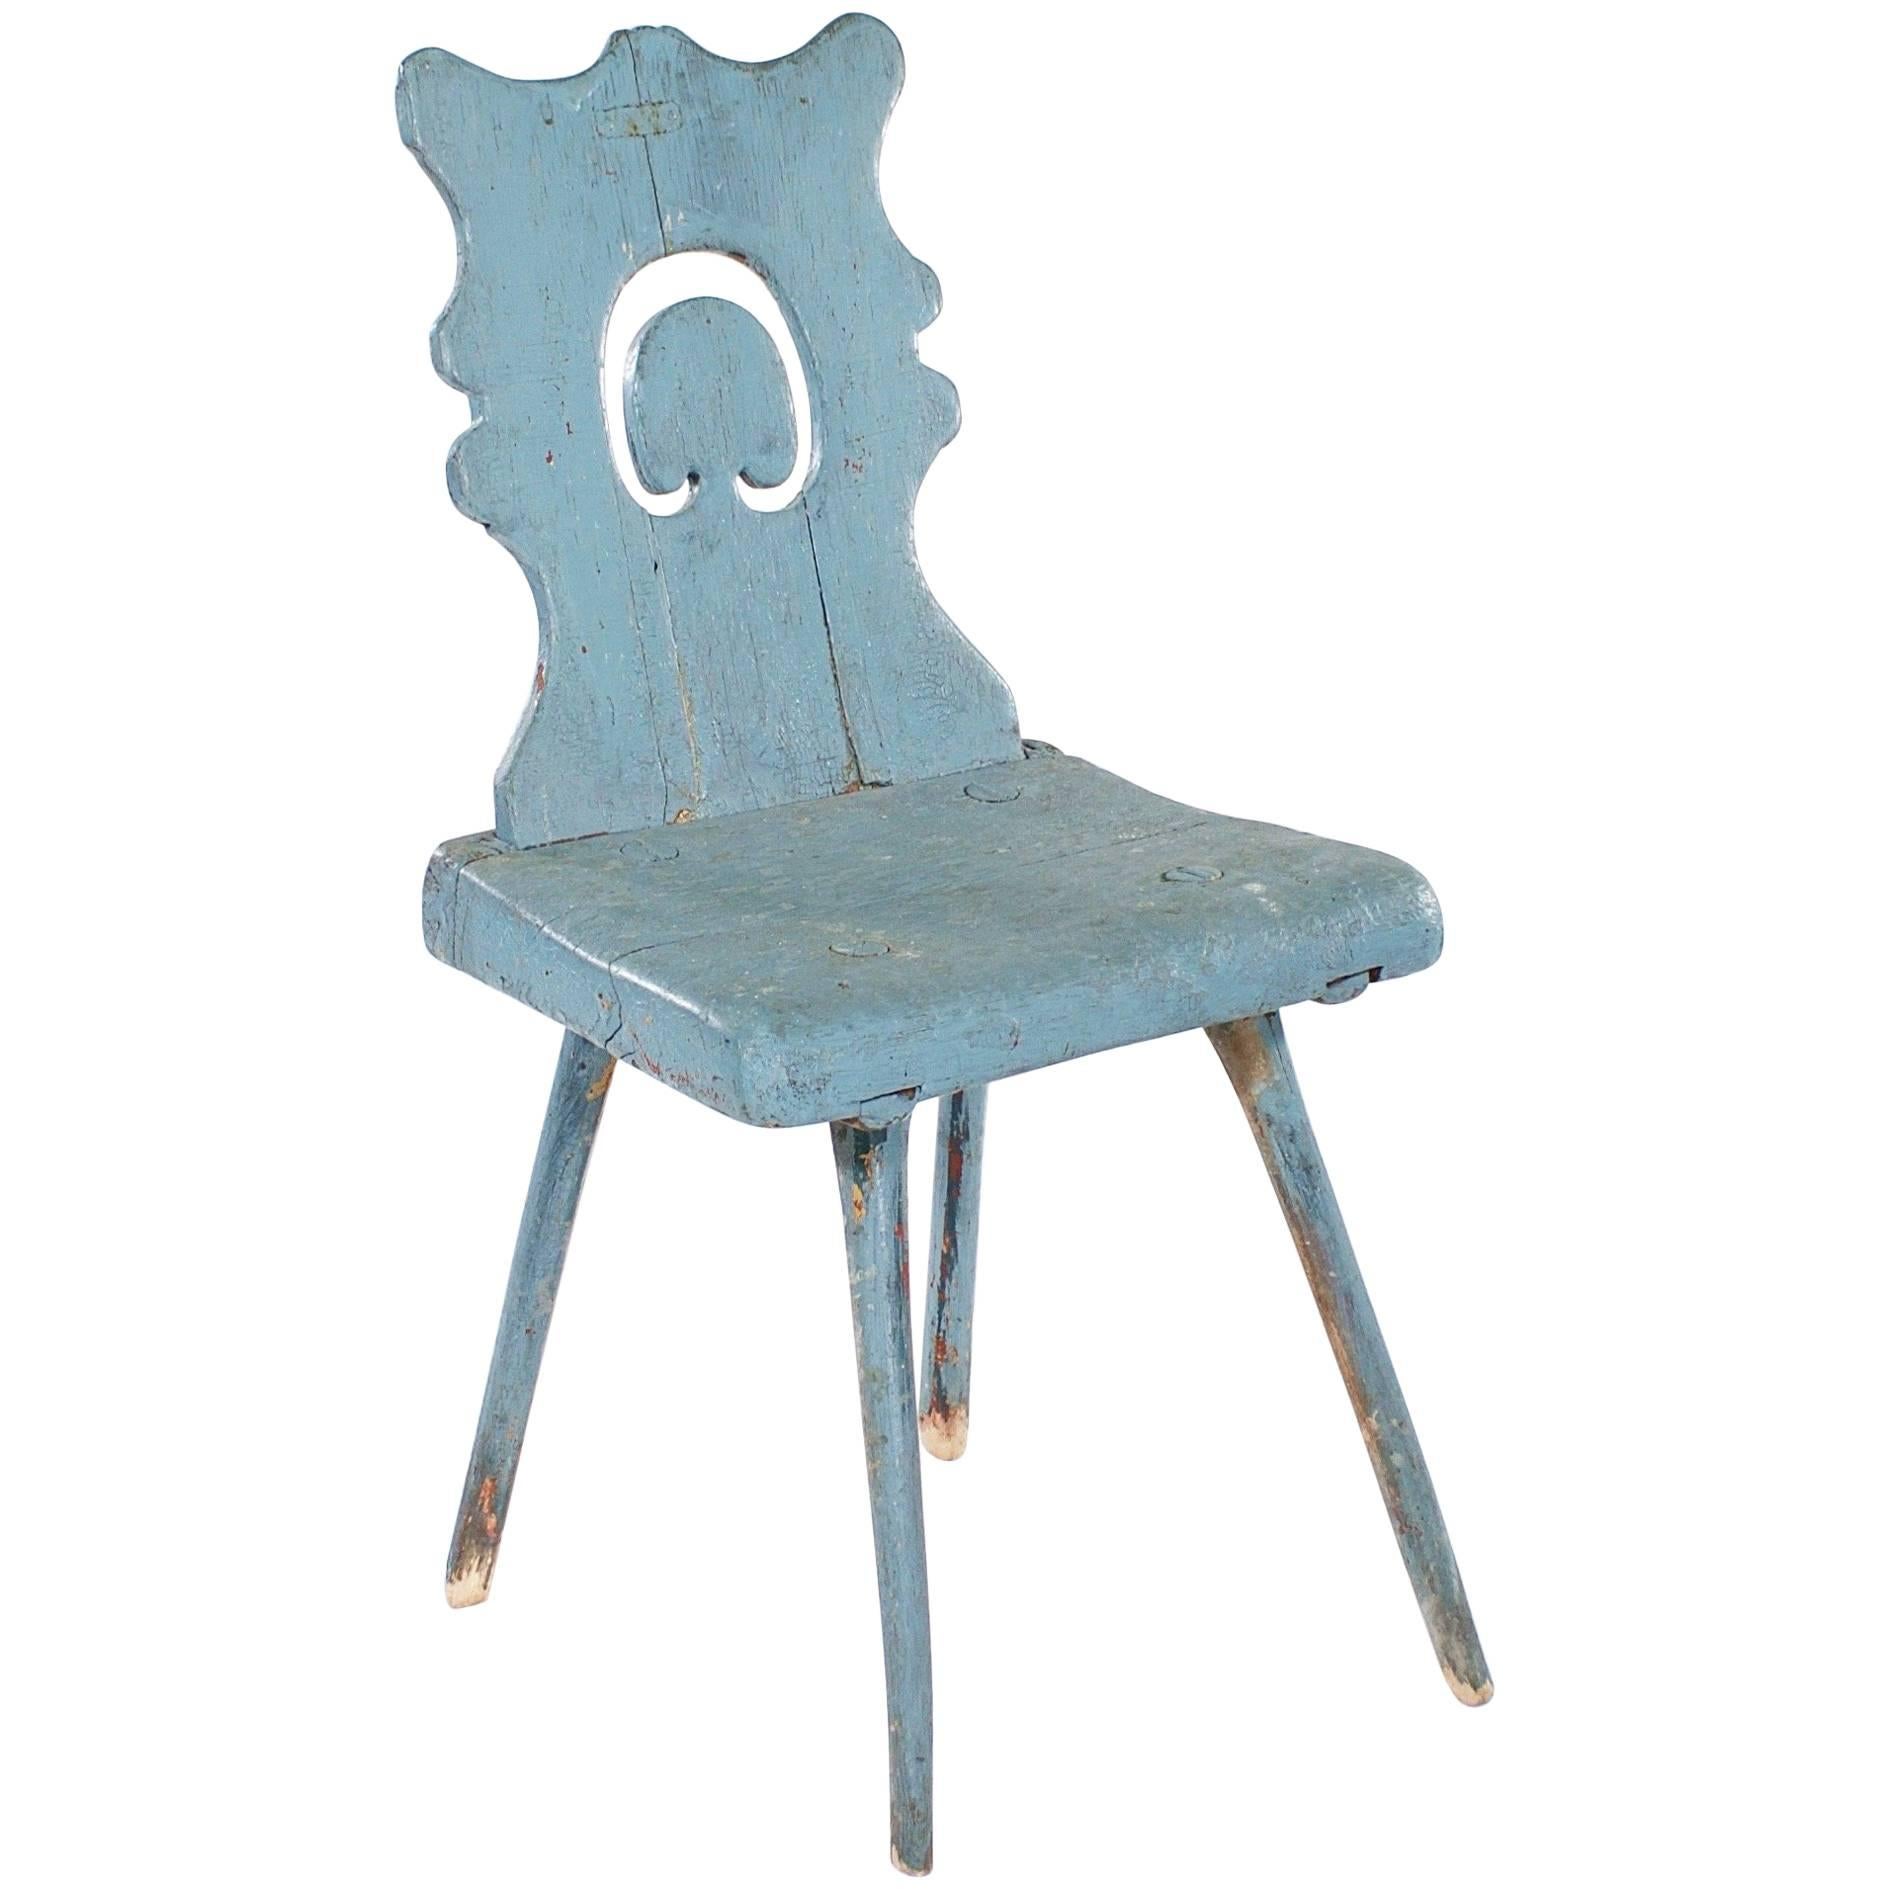 Rustic Painted Pine Folk Art Chair